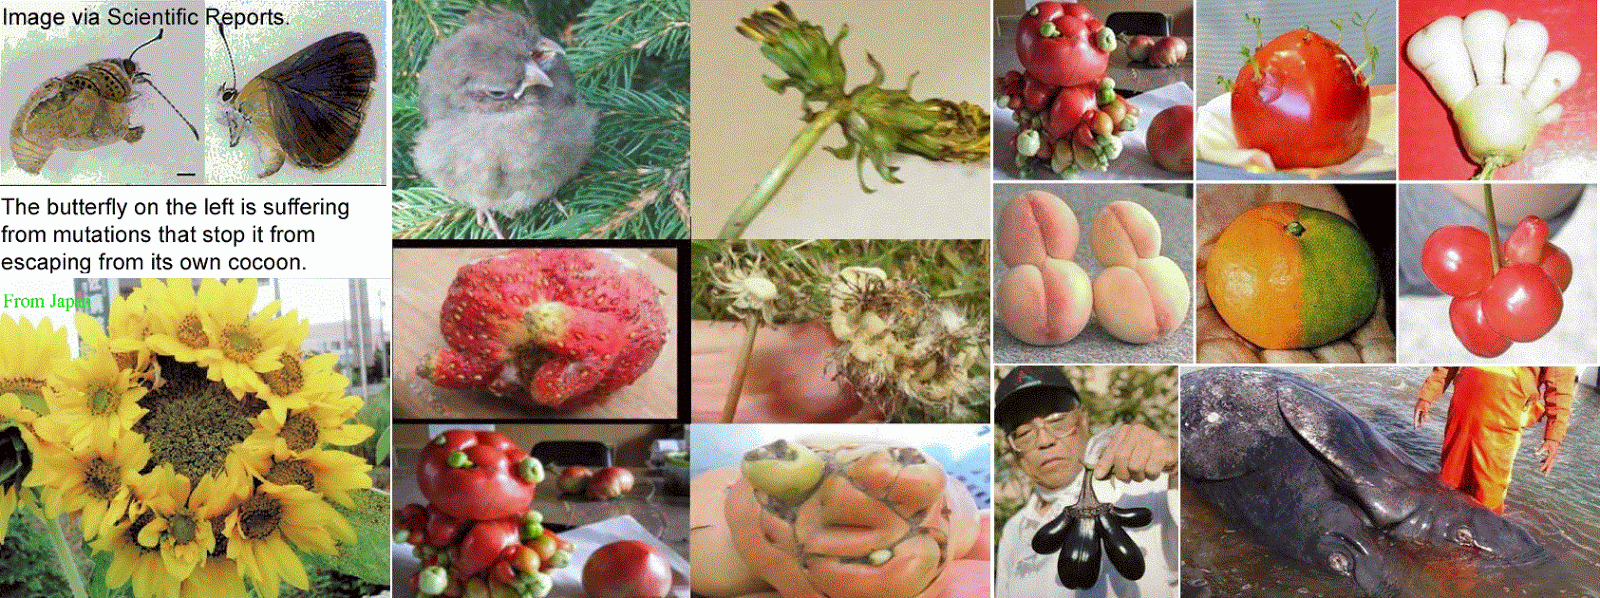 Fukushima2bmutations2b 2bbutterfiles252c2bfruits252c2bvegetables252c2bflowers252c2bwhale.gif